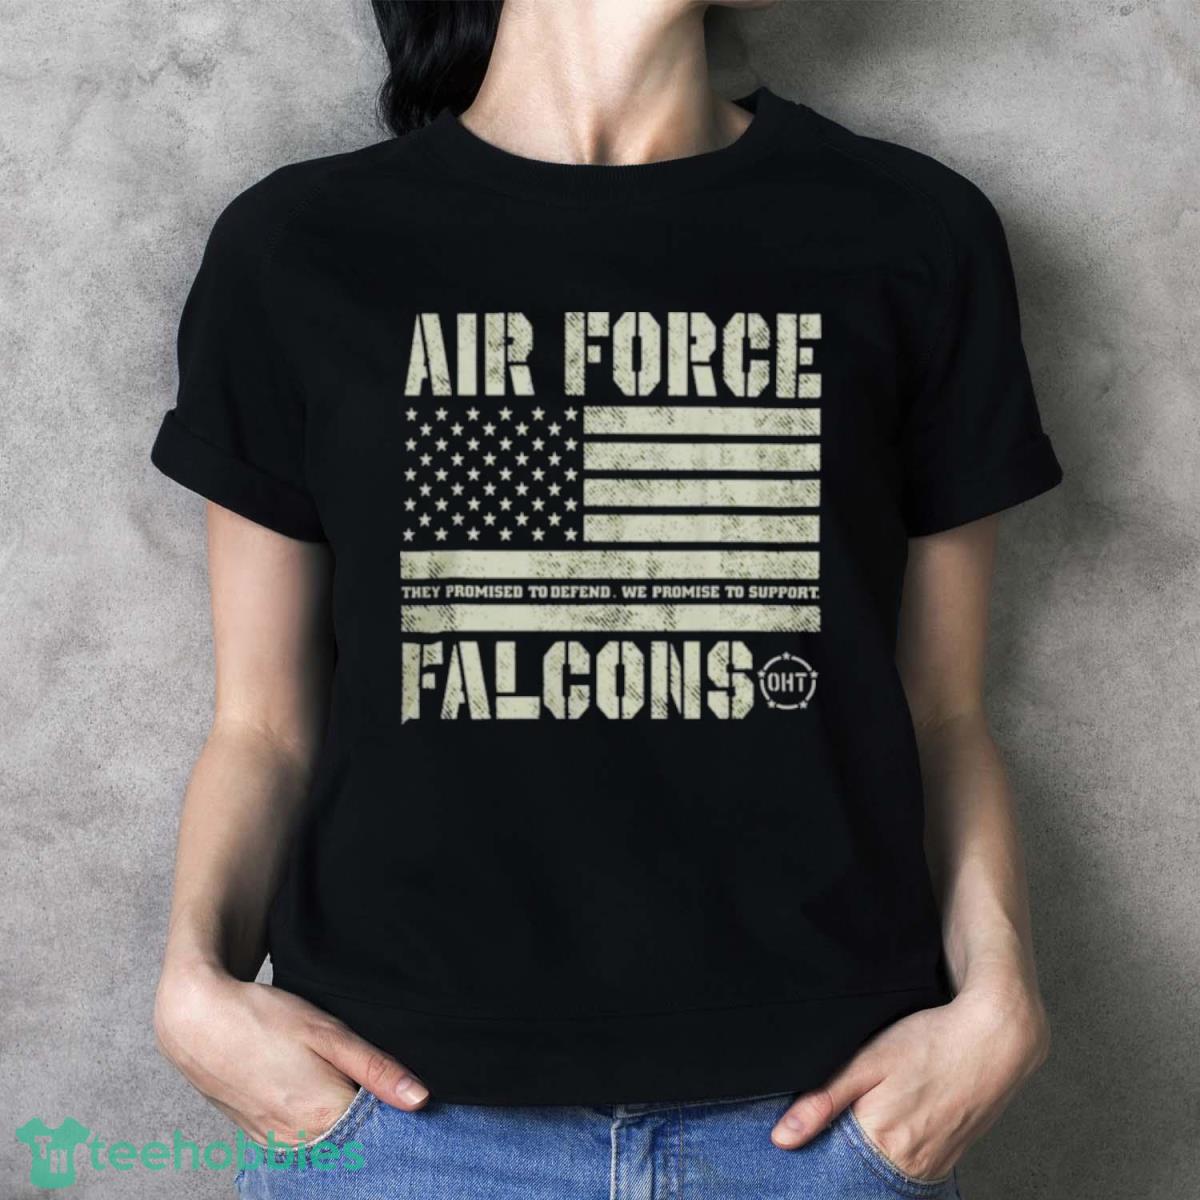 Air Force Falcons X Oht Military Appreciation Comfort Shirt - Ladies T-Shirt